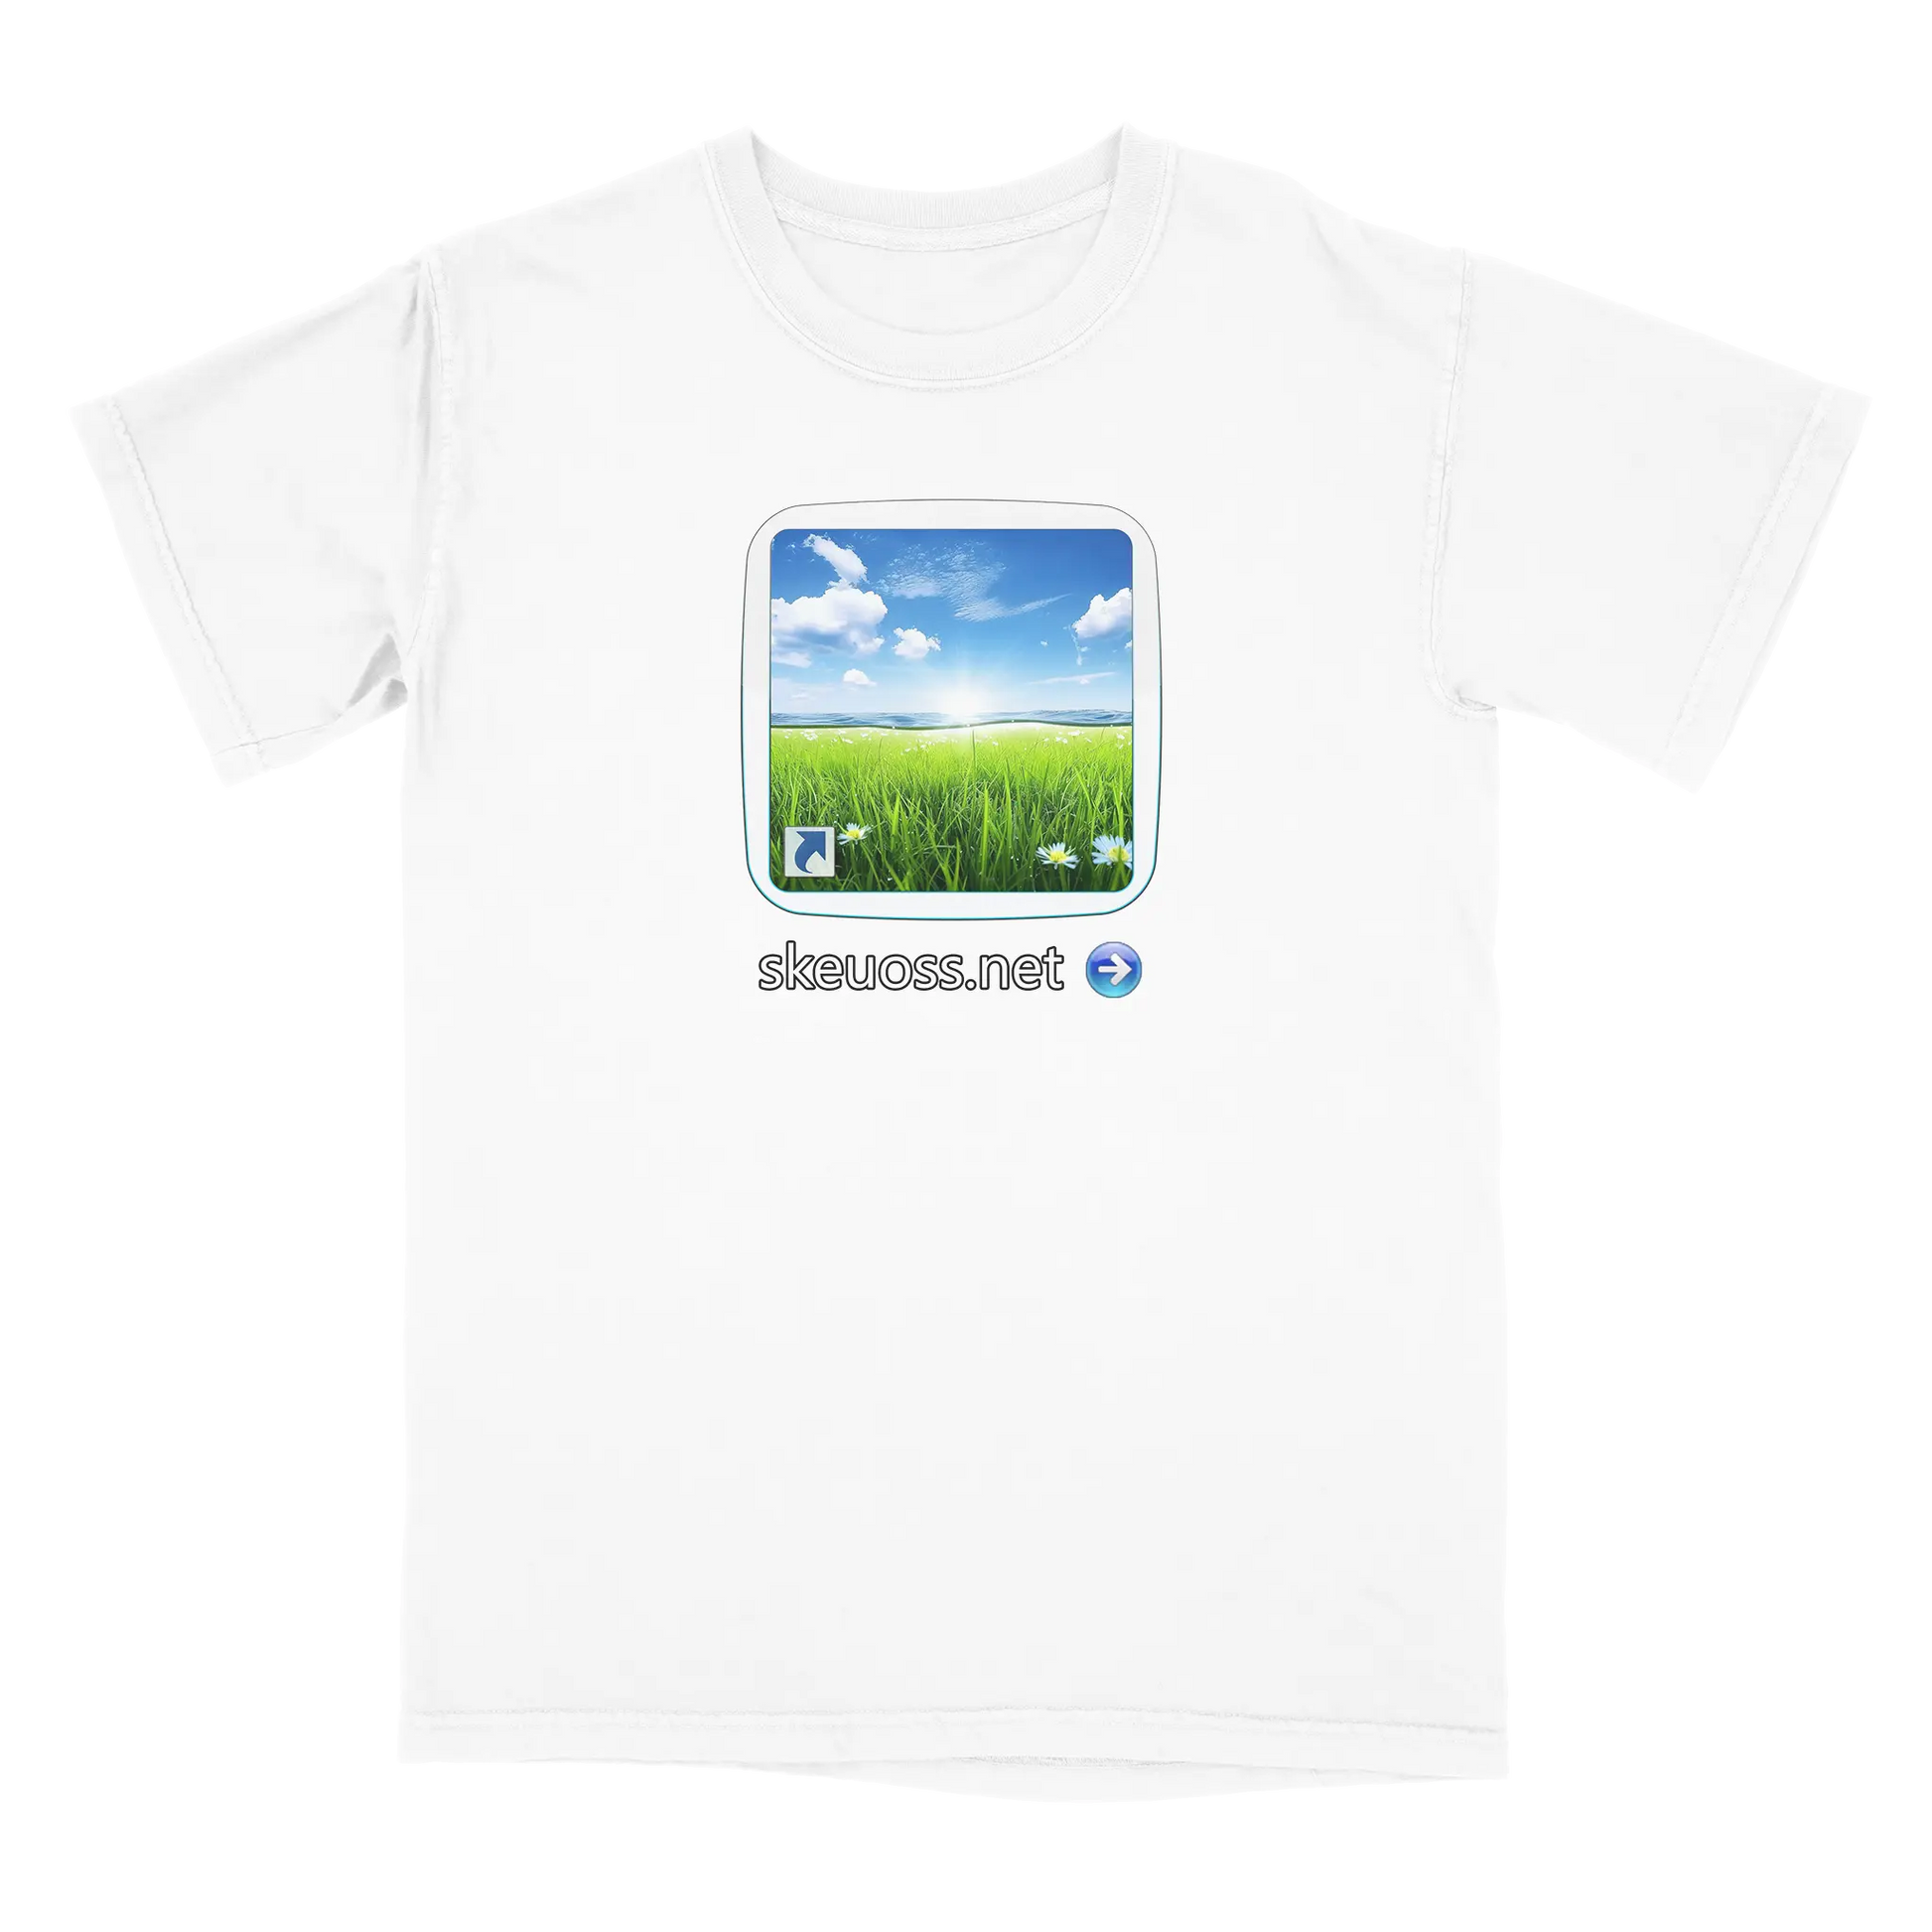 Frutiger Aero T-shirt - User Login Collection - User 306